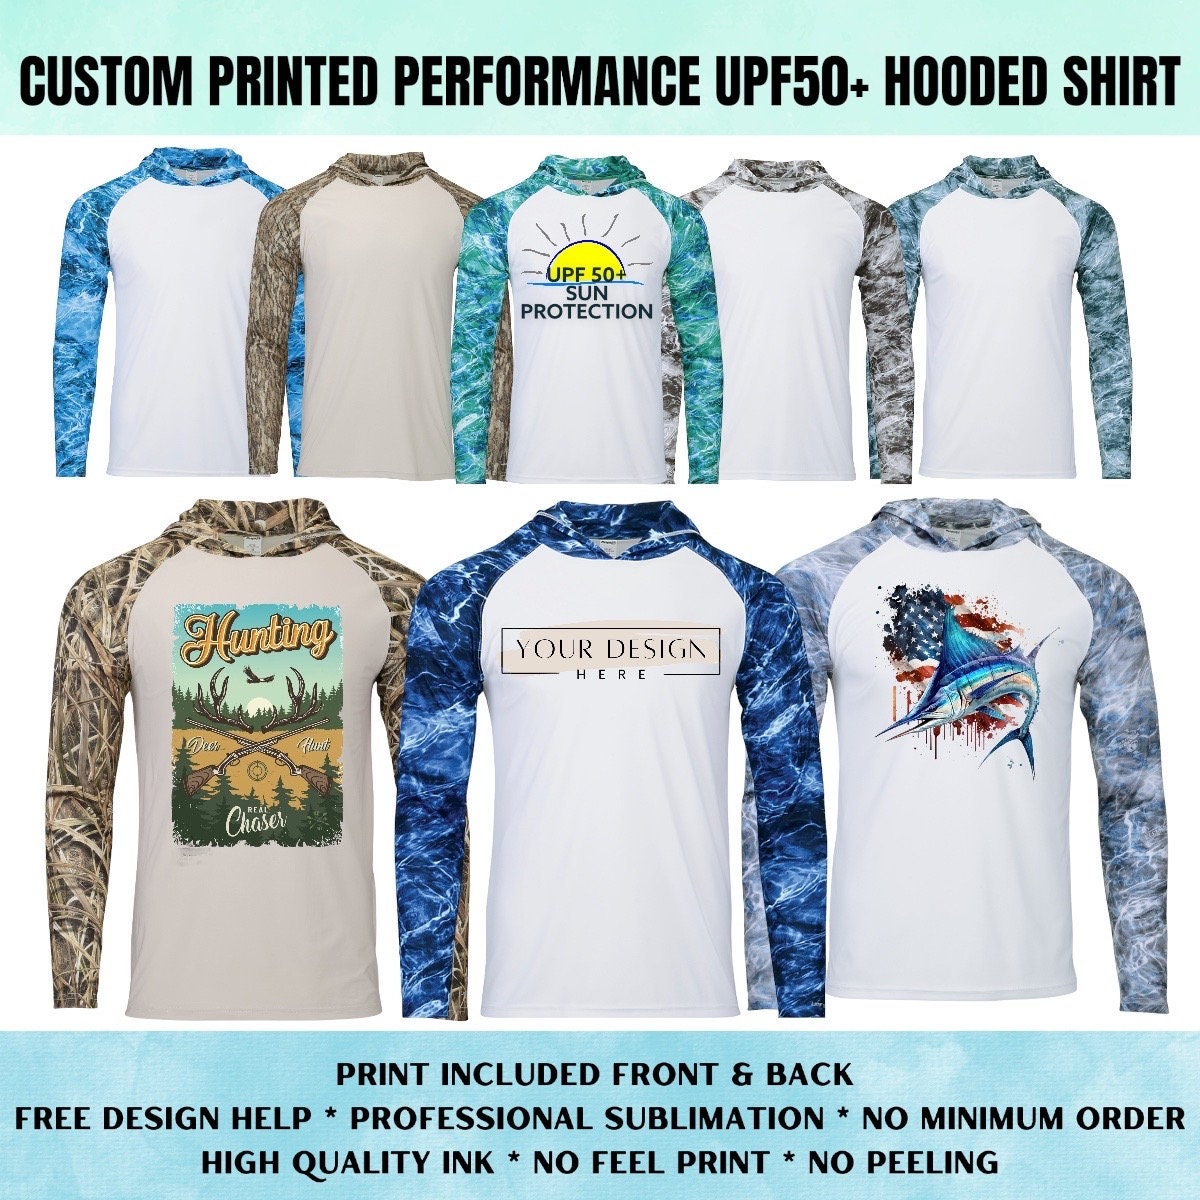 Custom Printed Performance Hooded Shirt W/ UPF 50 Sun Protection